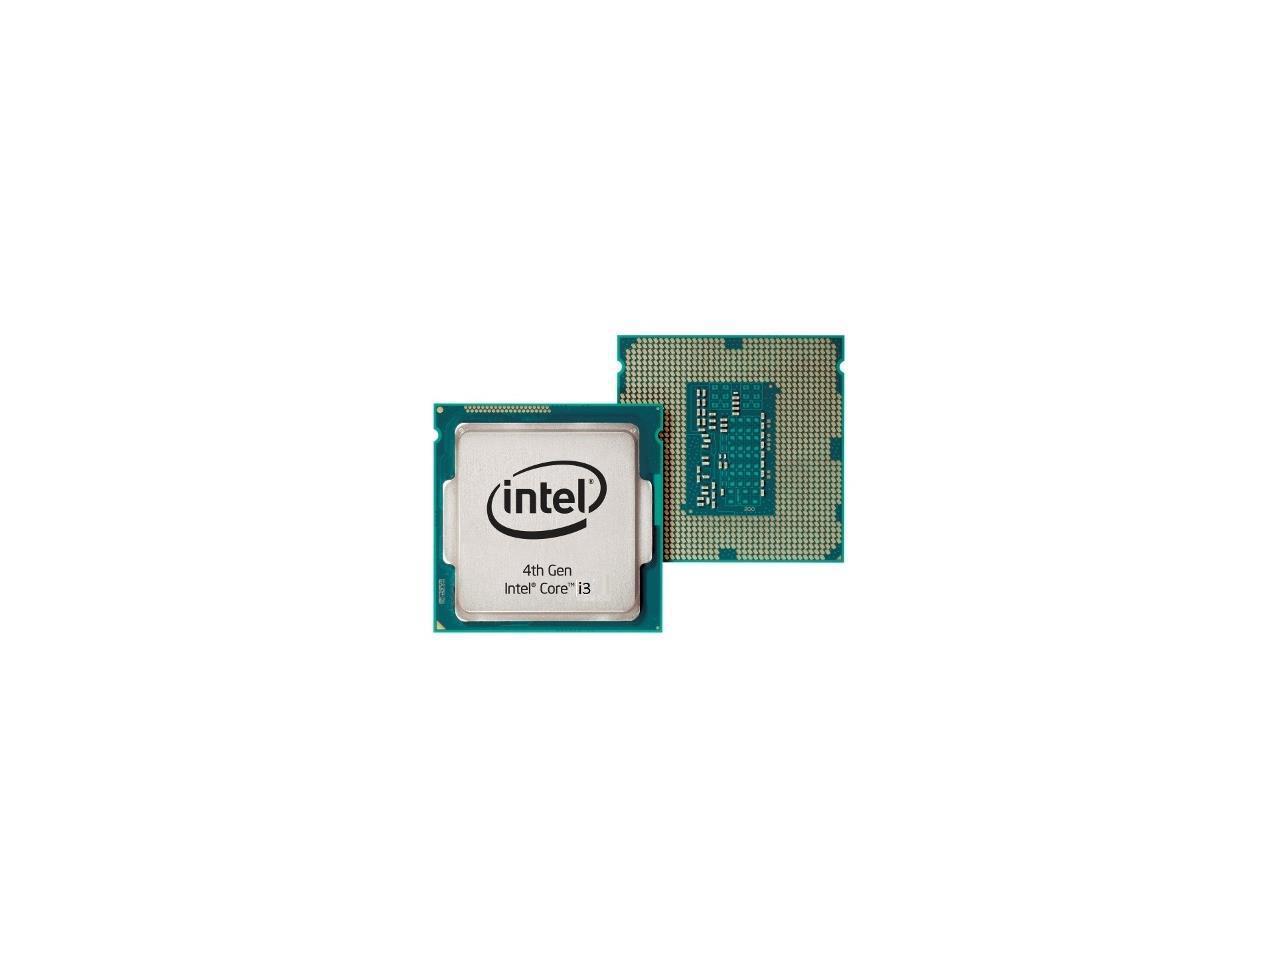 Core i3 4th Gen Haswell Dual-Core 3.4 GHz LGA 1150 54W Intel